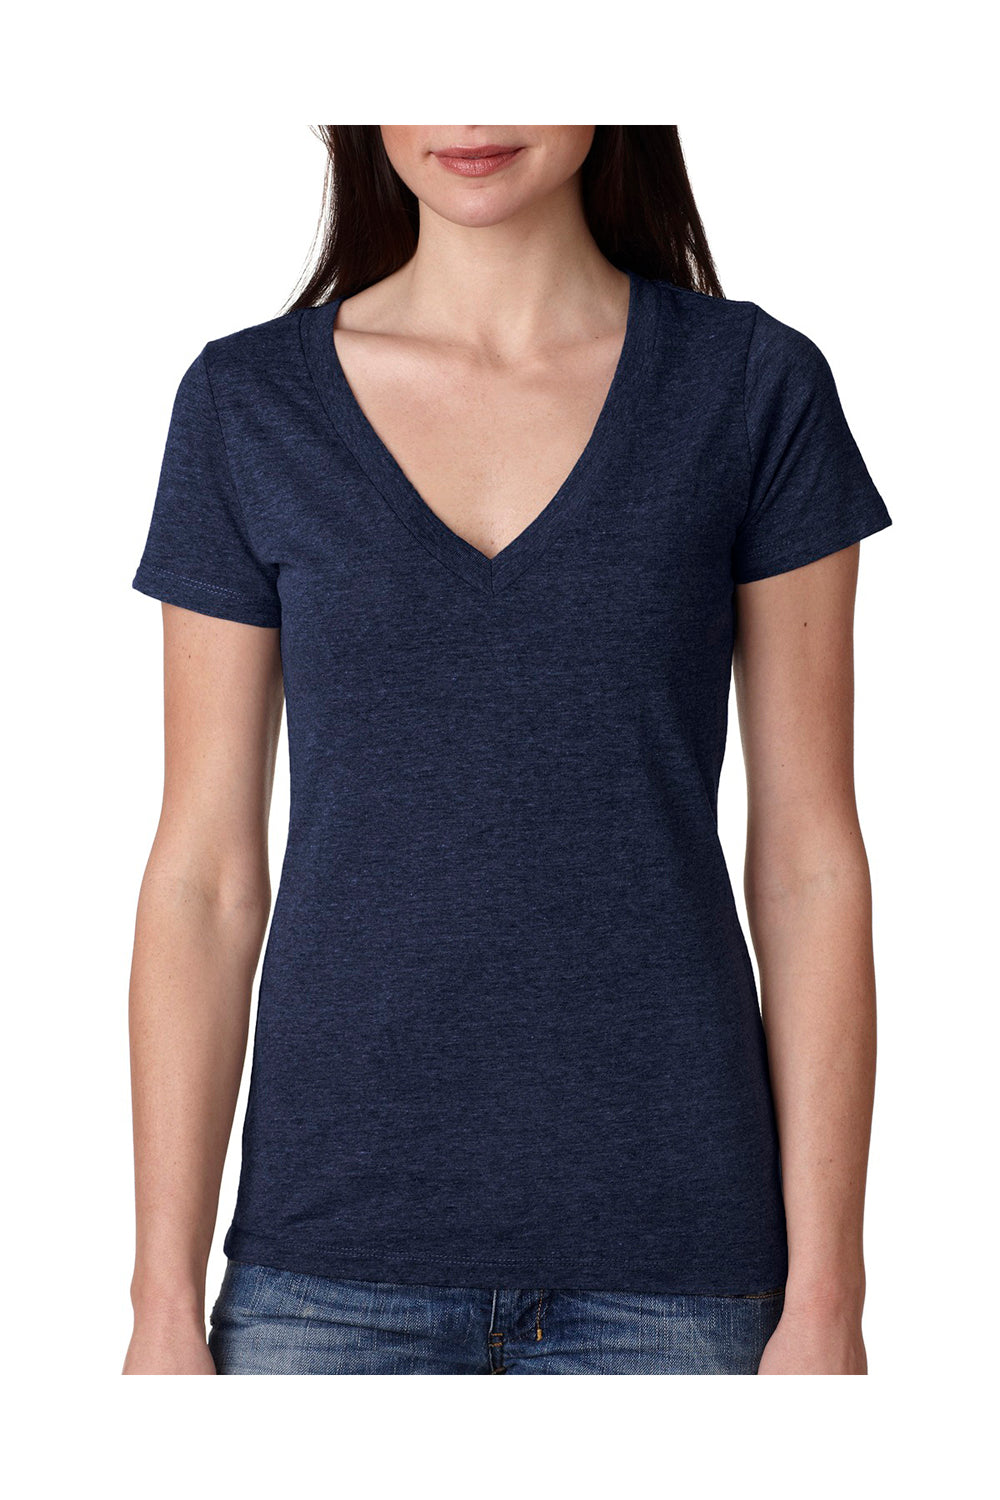 Next Level 6740 Womens Jersey Short Sleeve V-Neck T-Shirt Navy Blue Front